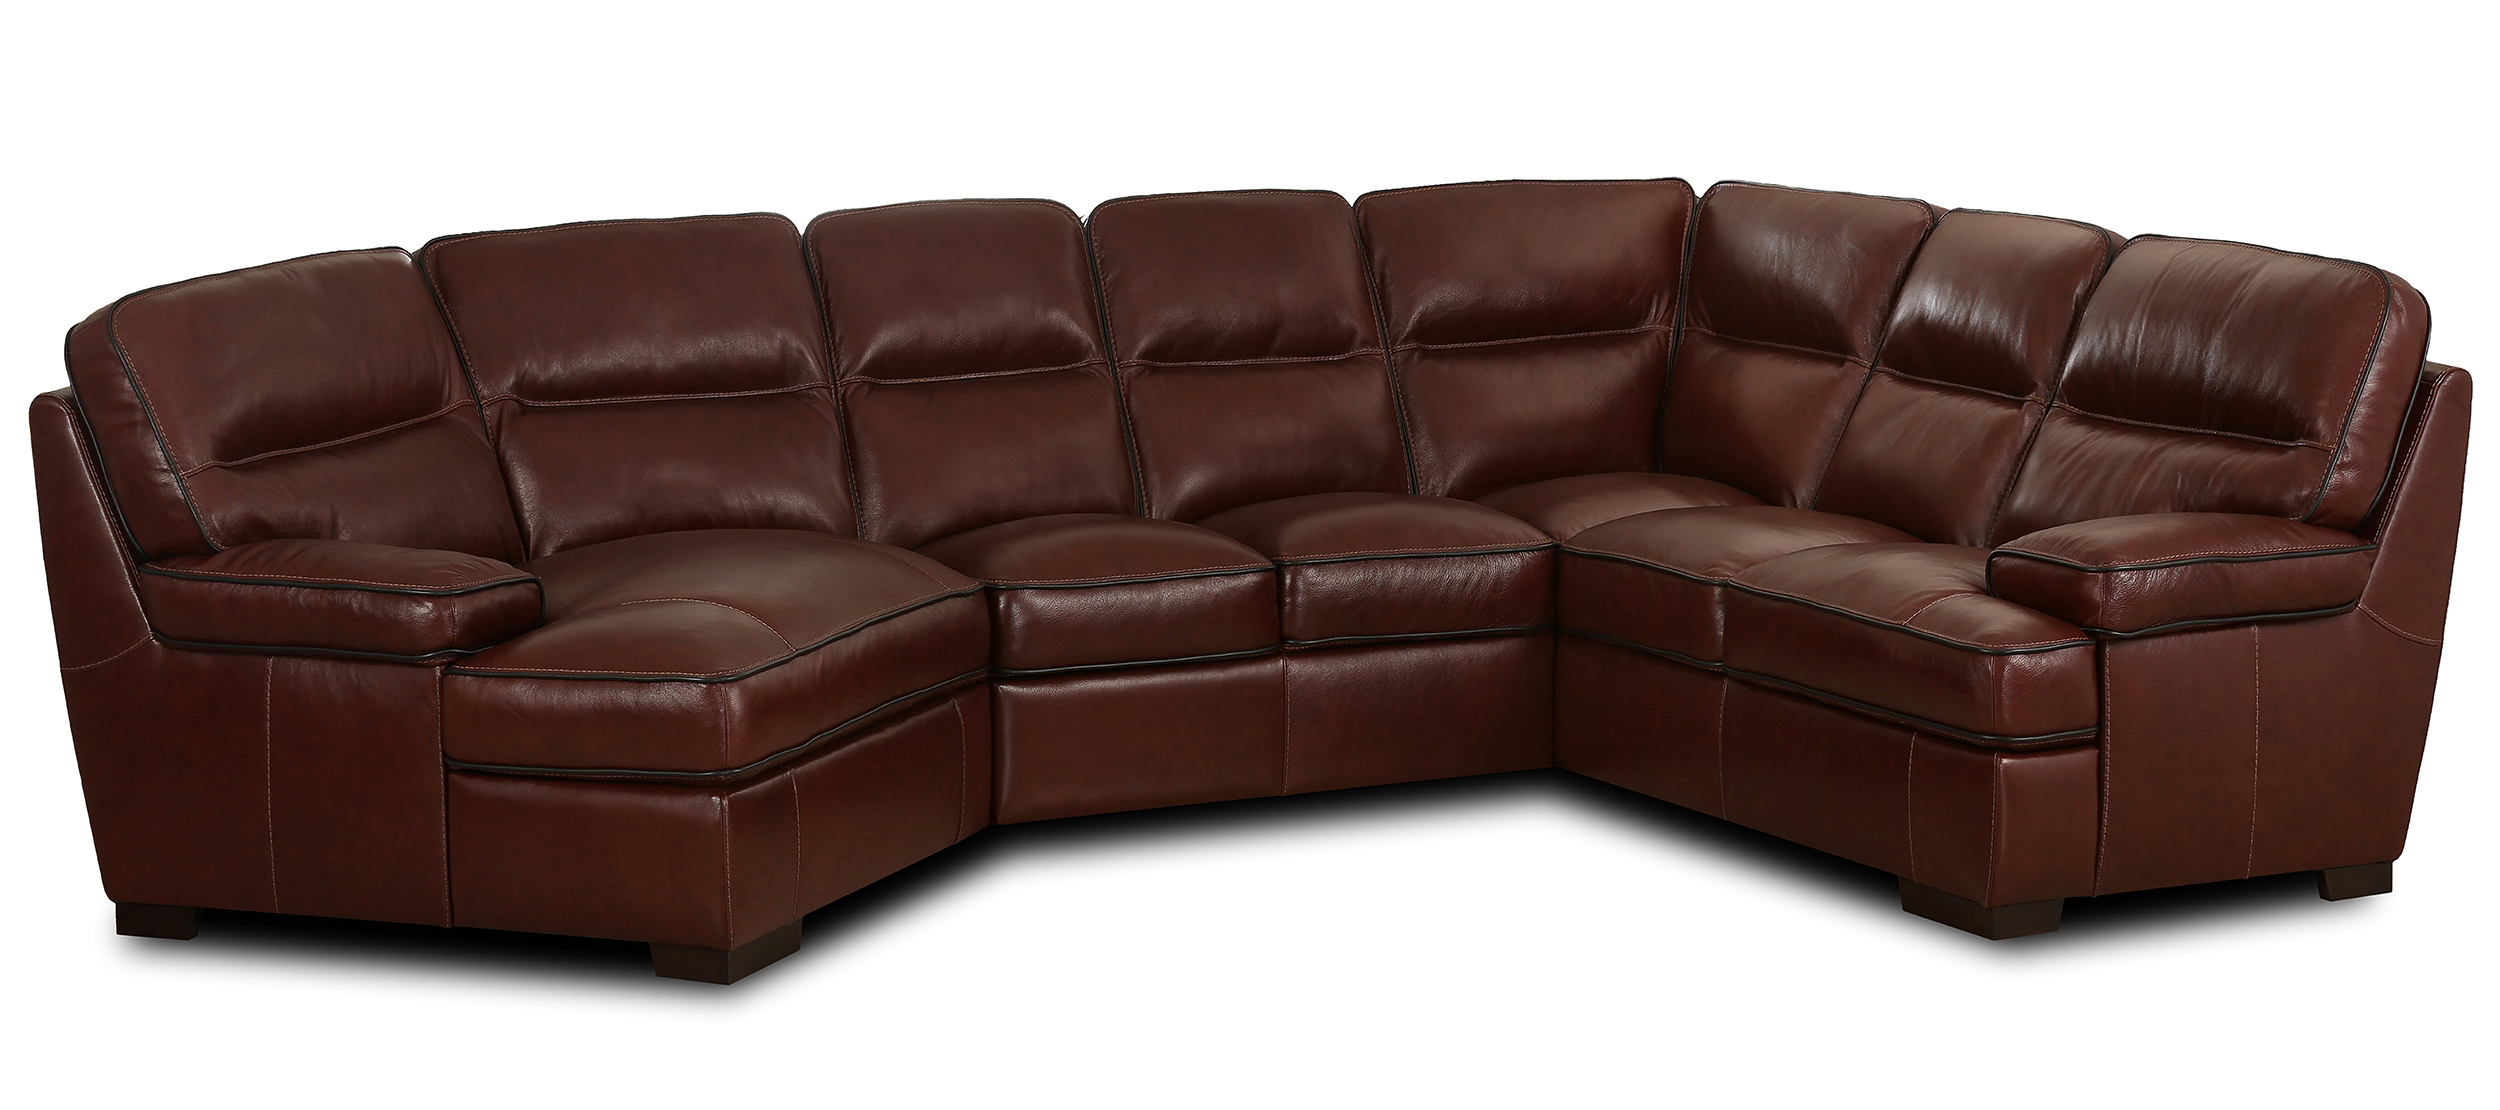 shanghai trayton furniture co leather sofa